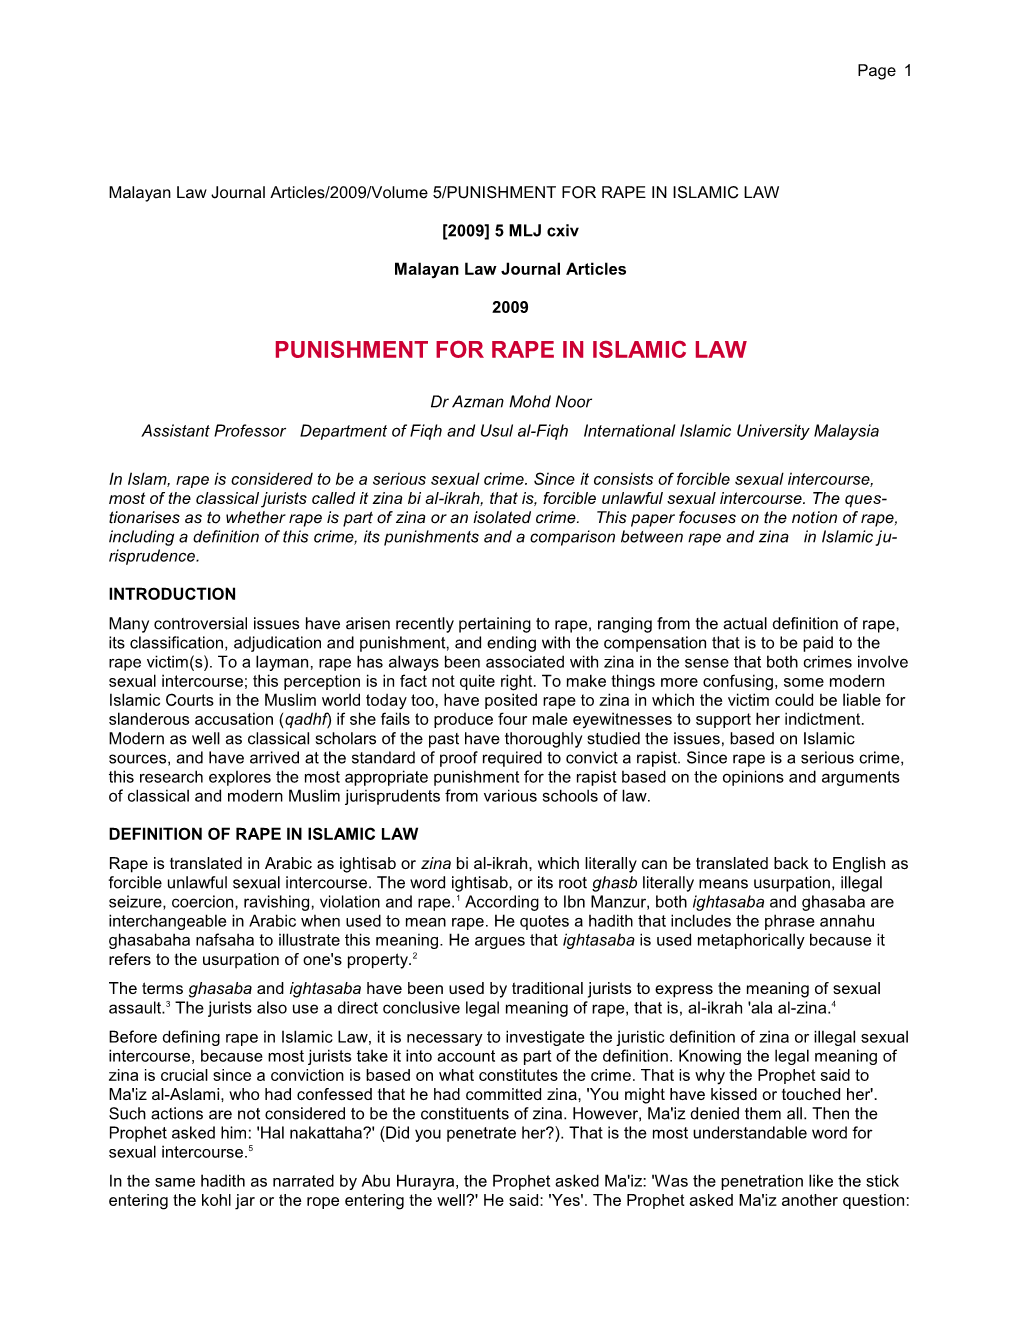 Punishment for Rape in Islamic Law